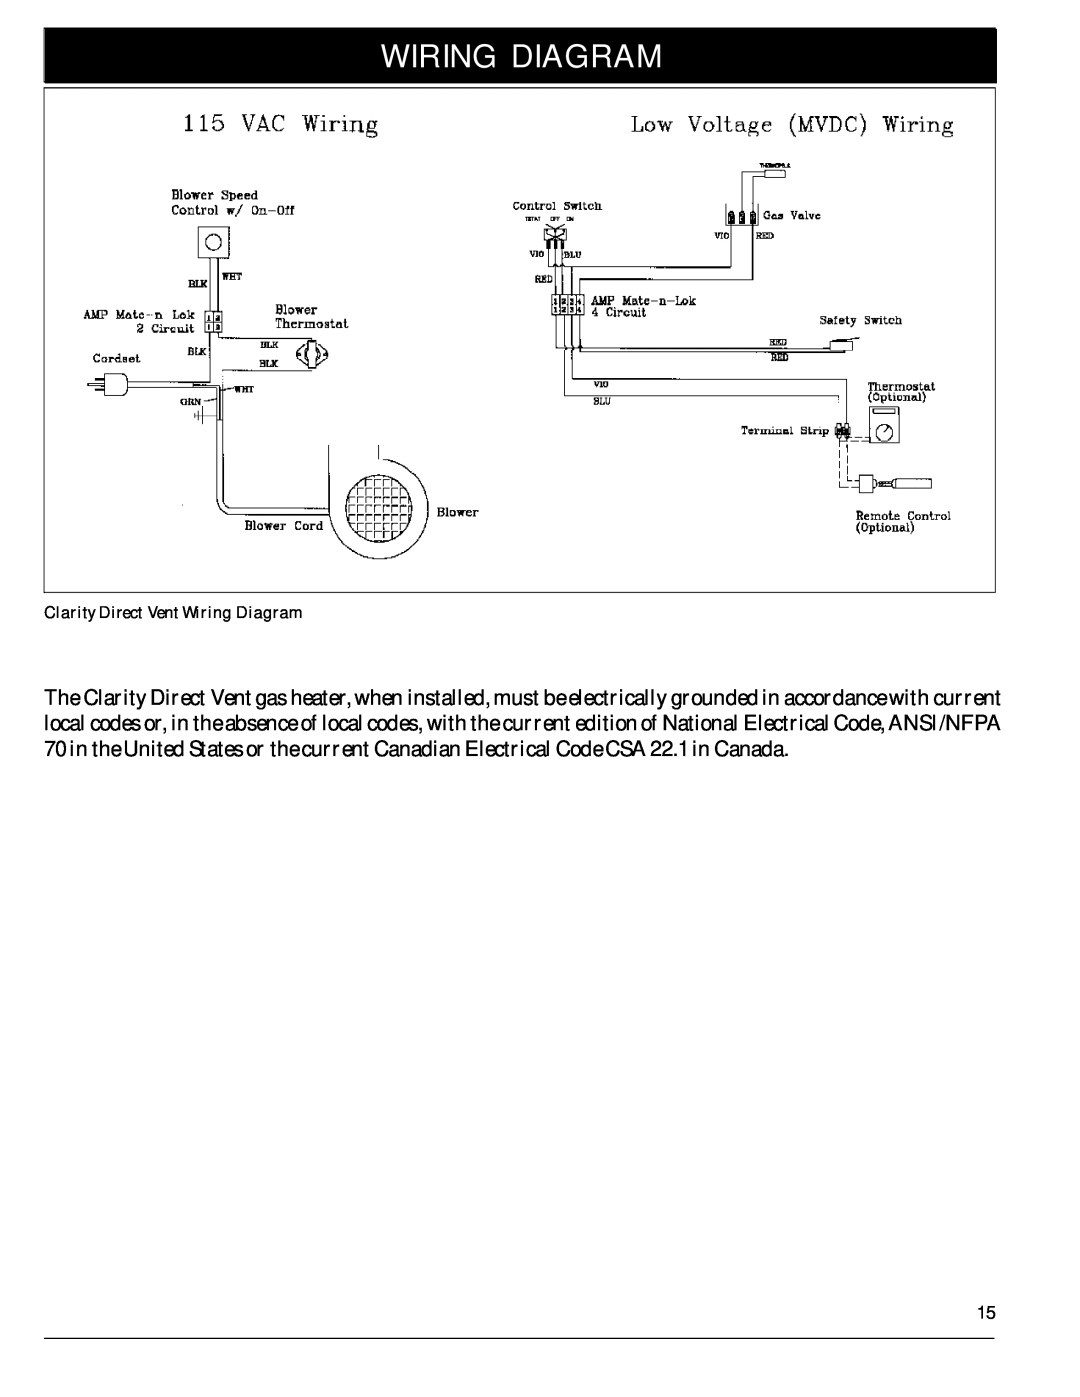 Harman Stove Company 929 DV manual Clarity Direct Vent Wiring Diagram 